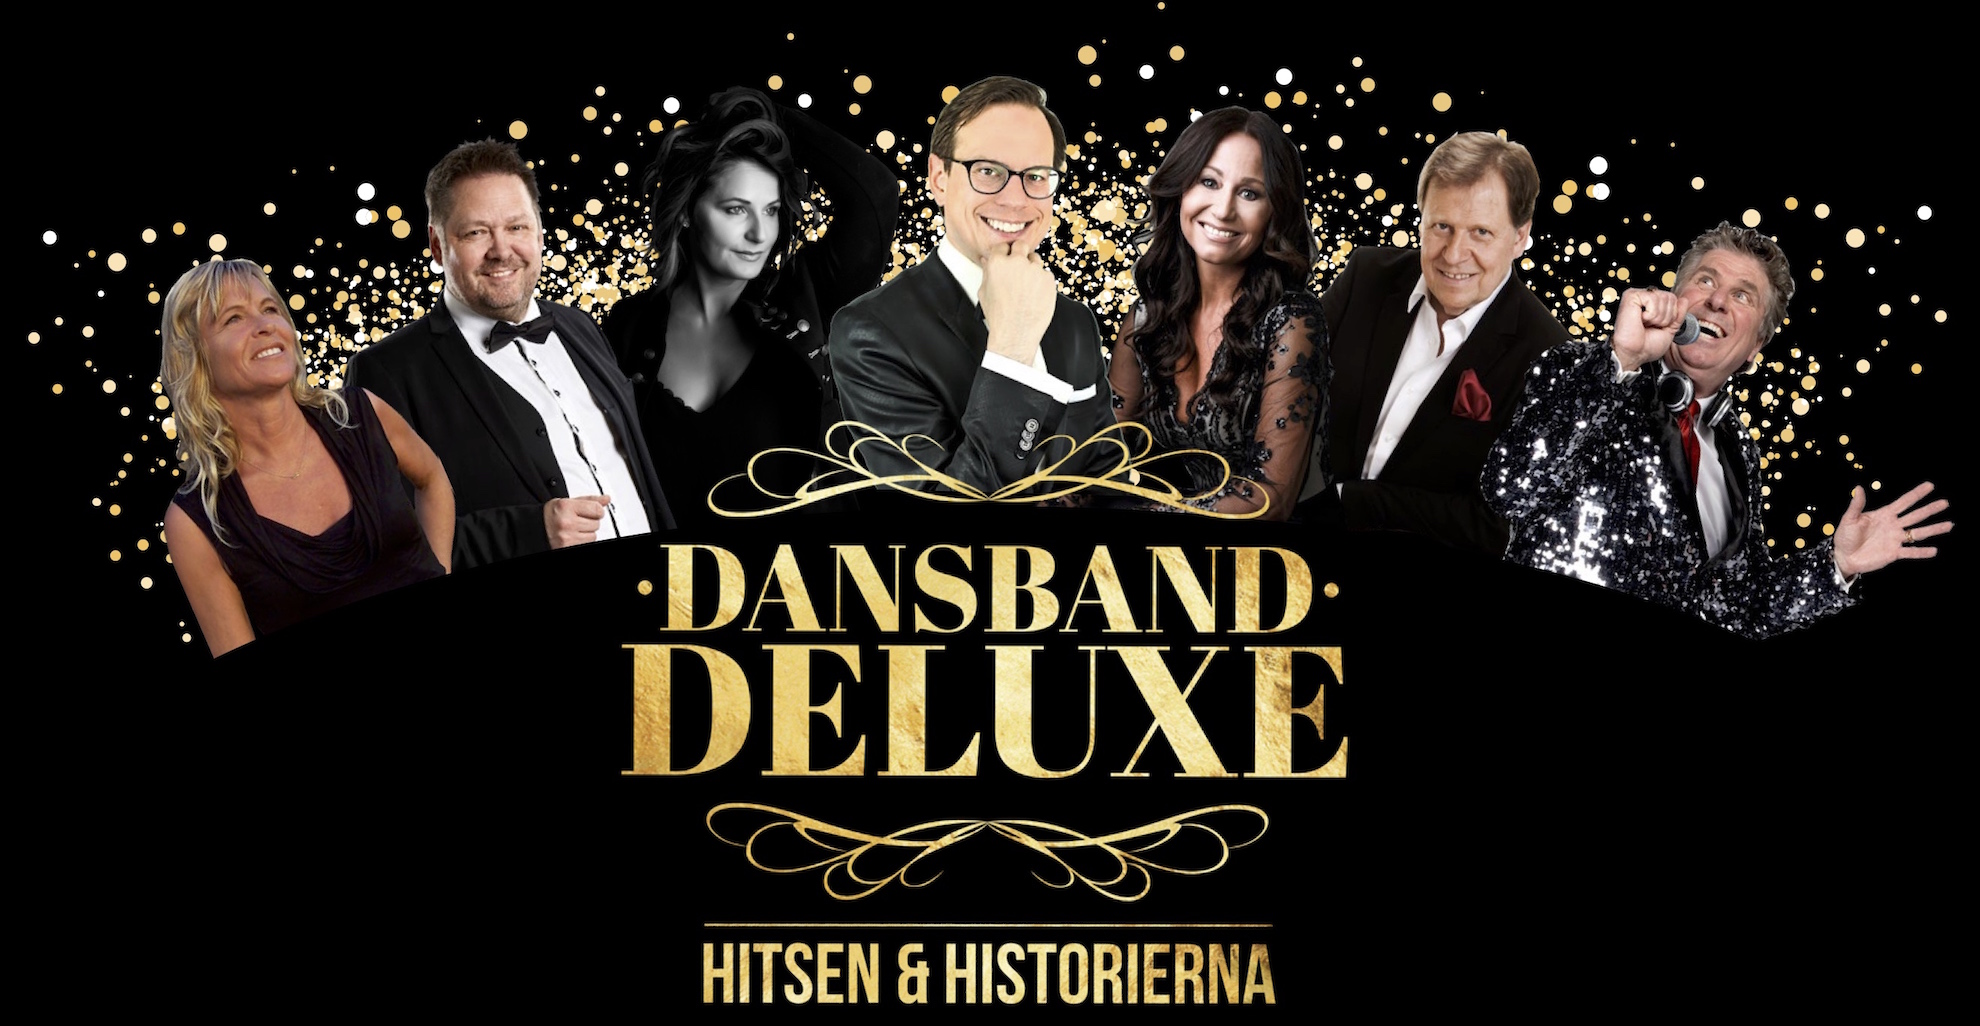 En av Sveriges största dansbandsapparater, ”Dansband Deluxe” i ledning av Thomas Deutgen på turné 2021!